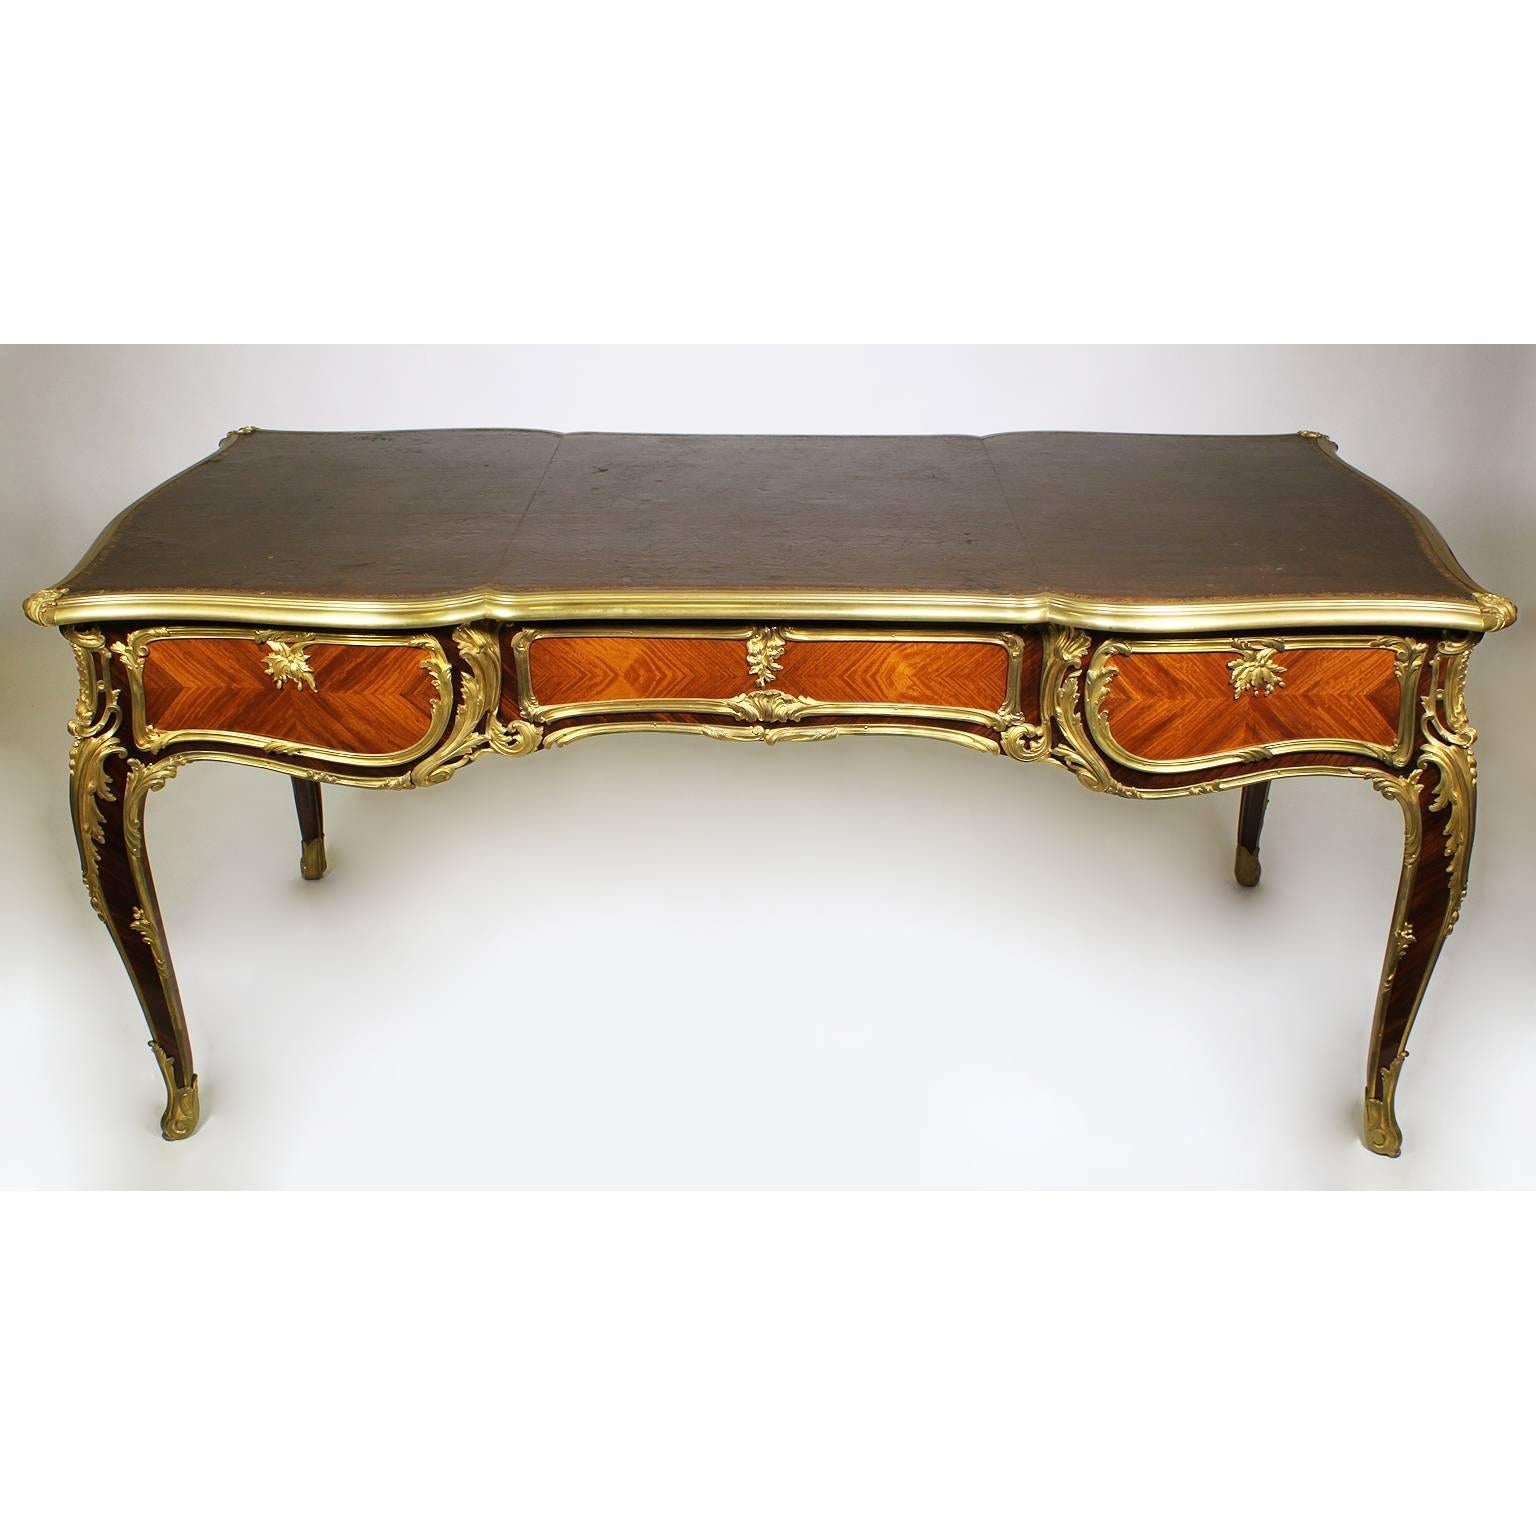 French 19th Century Louis XV Style Kingwood Gilt-Bronze Mounted Bureau Plat Desk For Sale 1